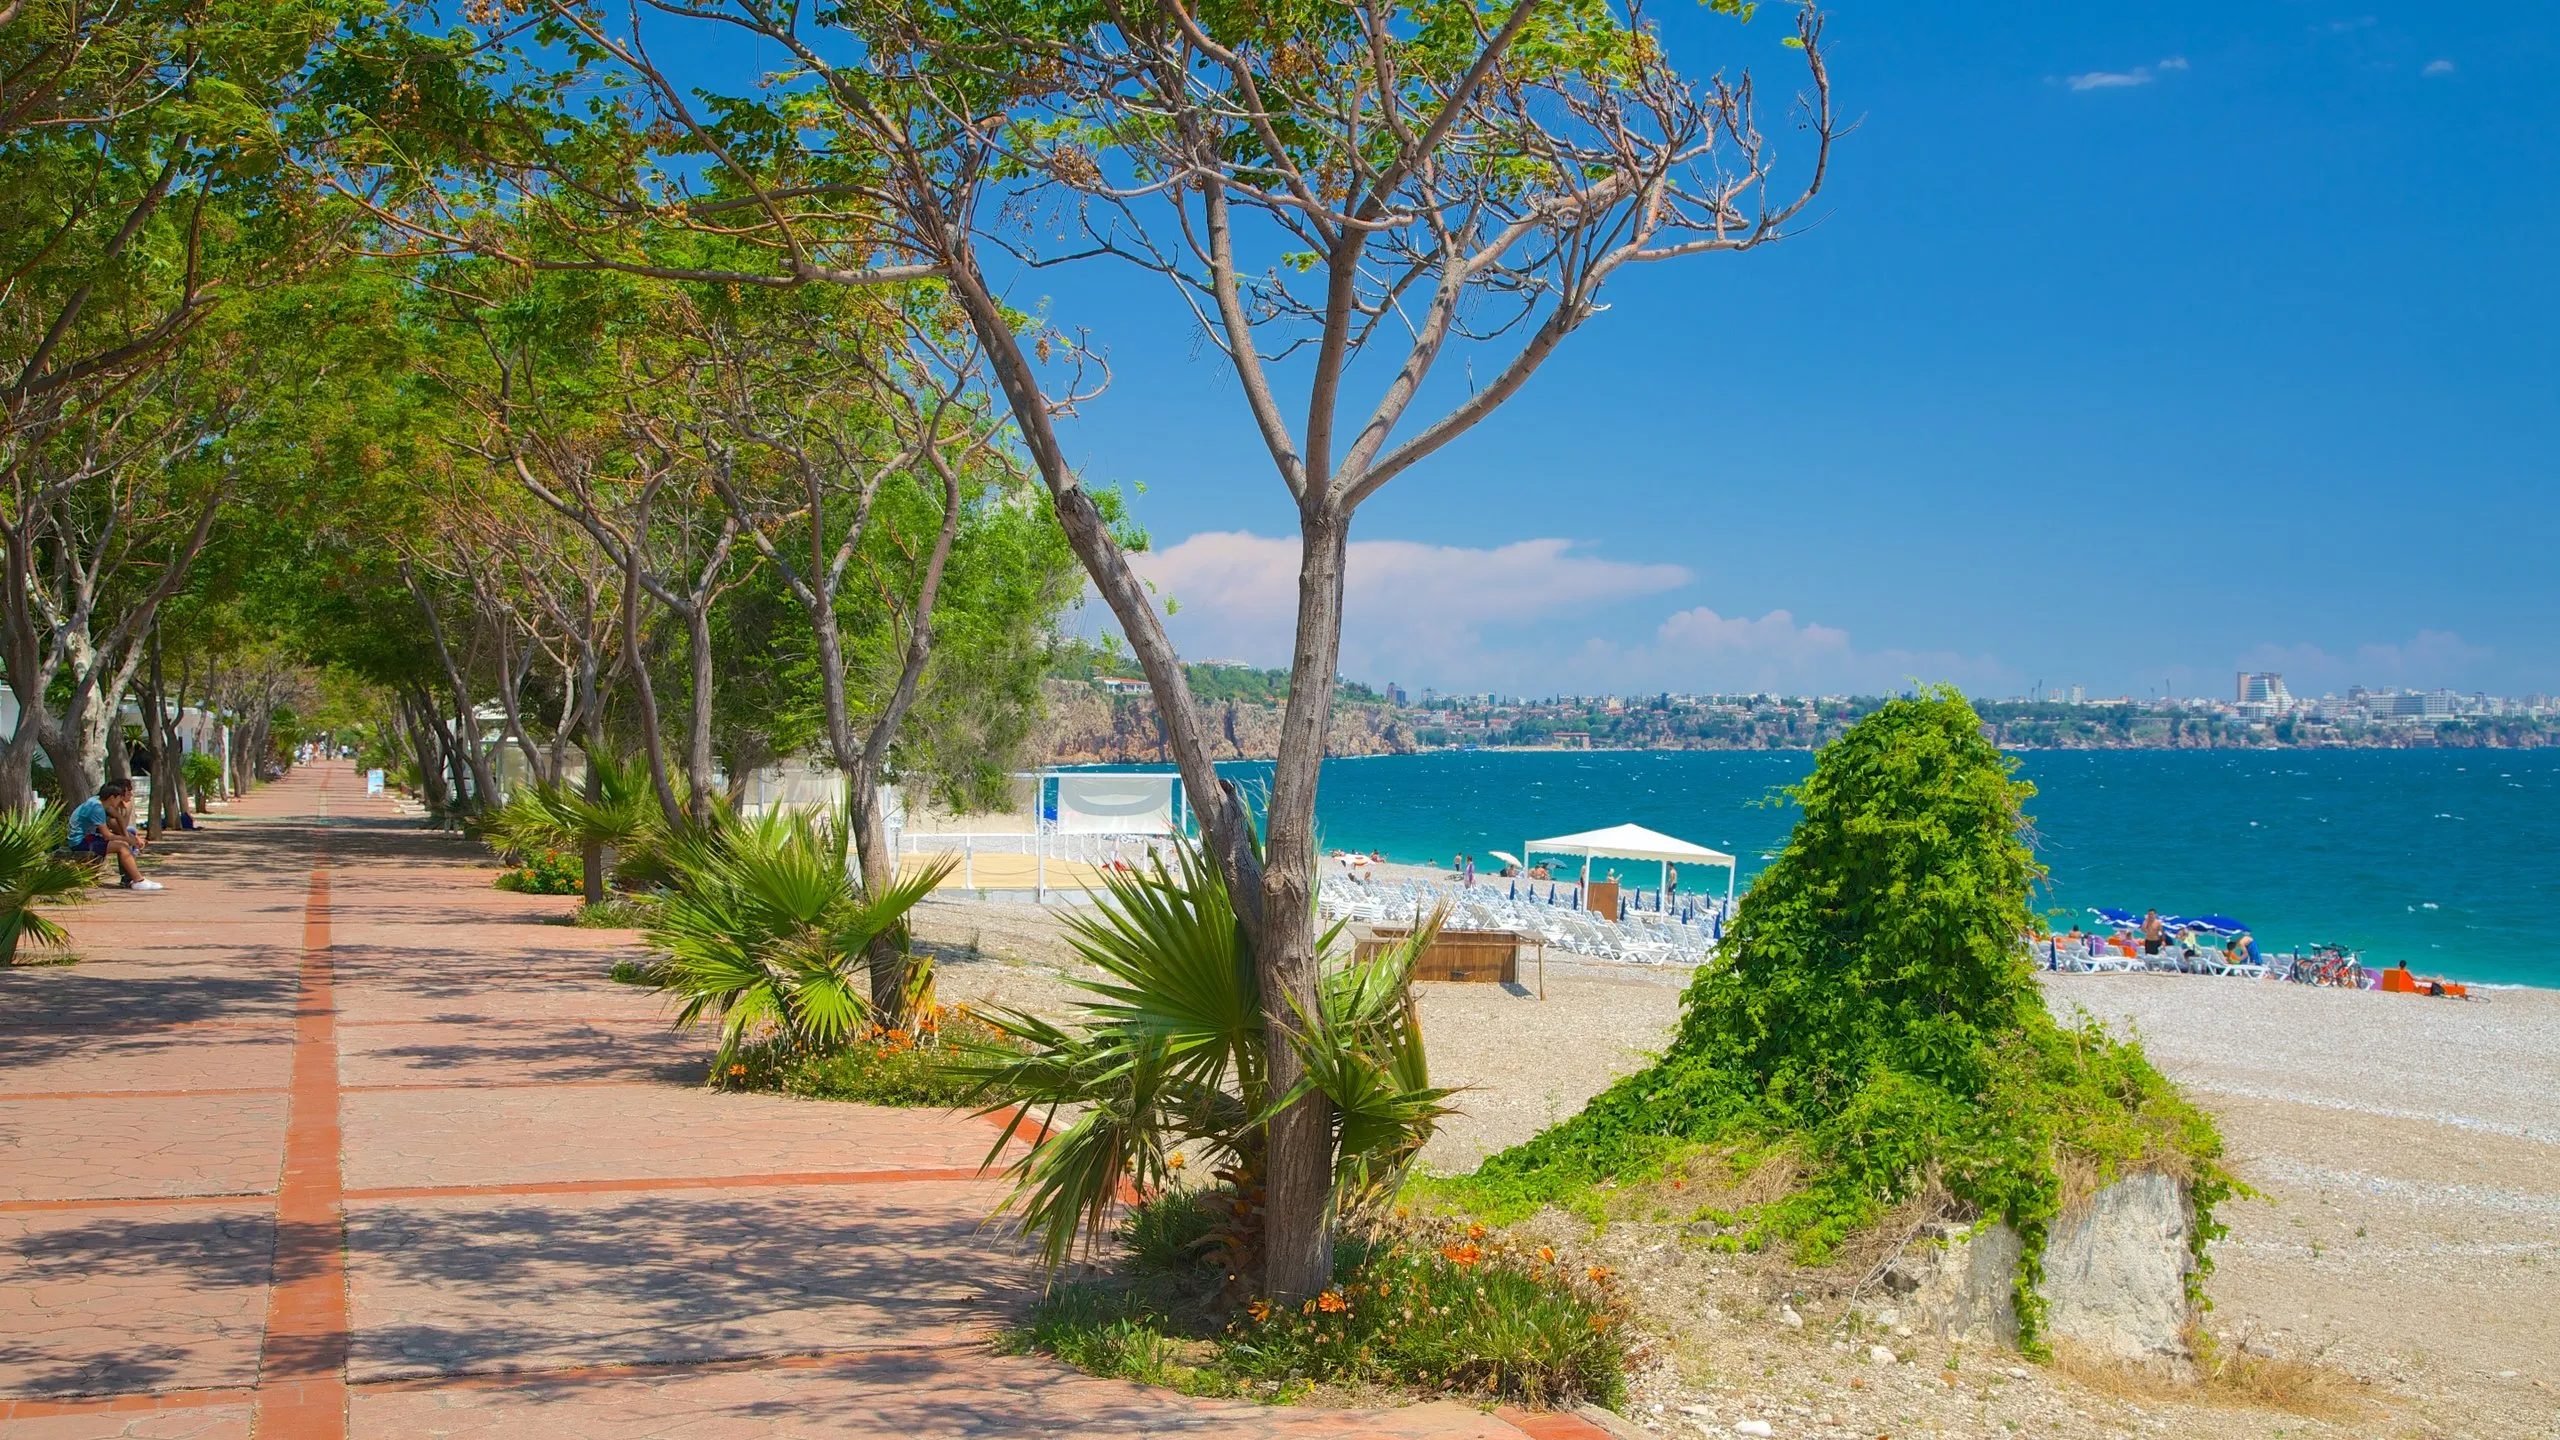 Beach Antalya Life Park in Turkey, Central Asia | Beaches - Rated 3.7